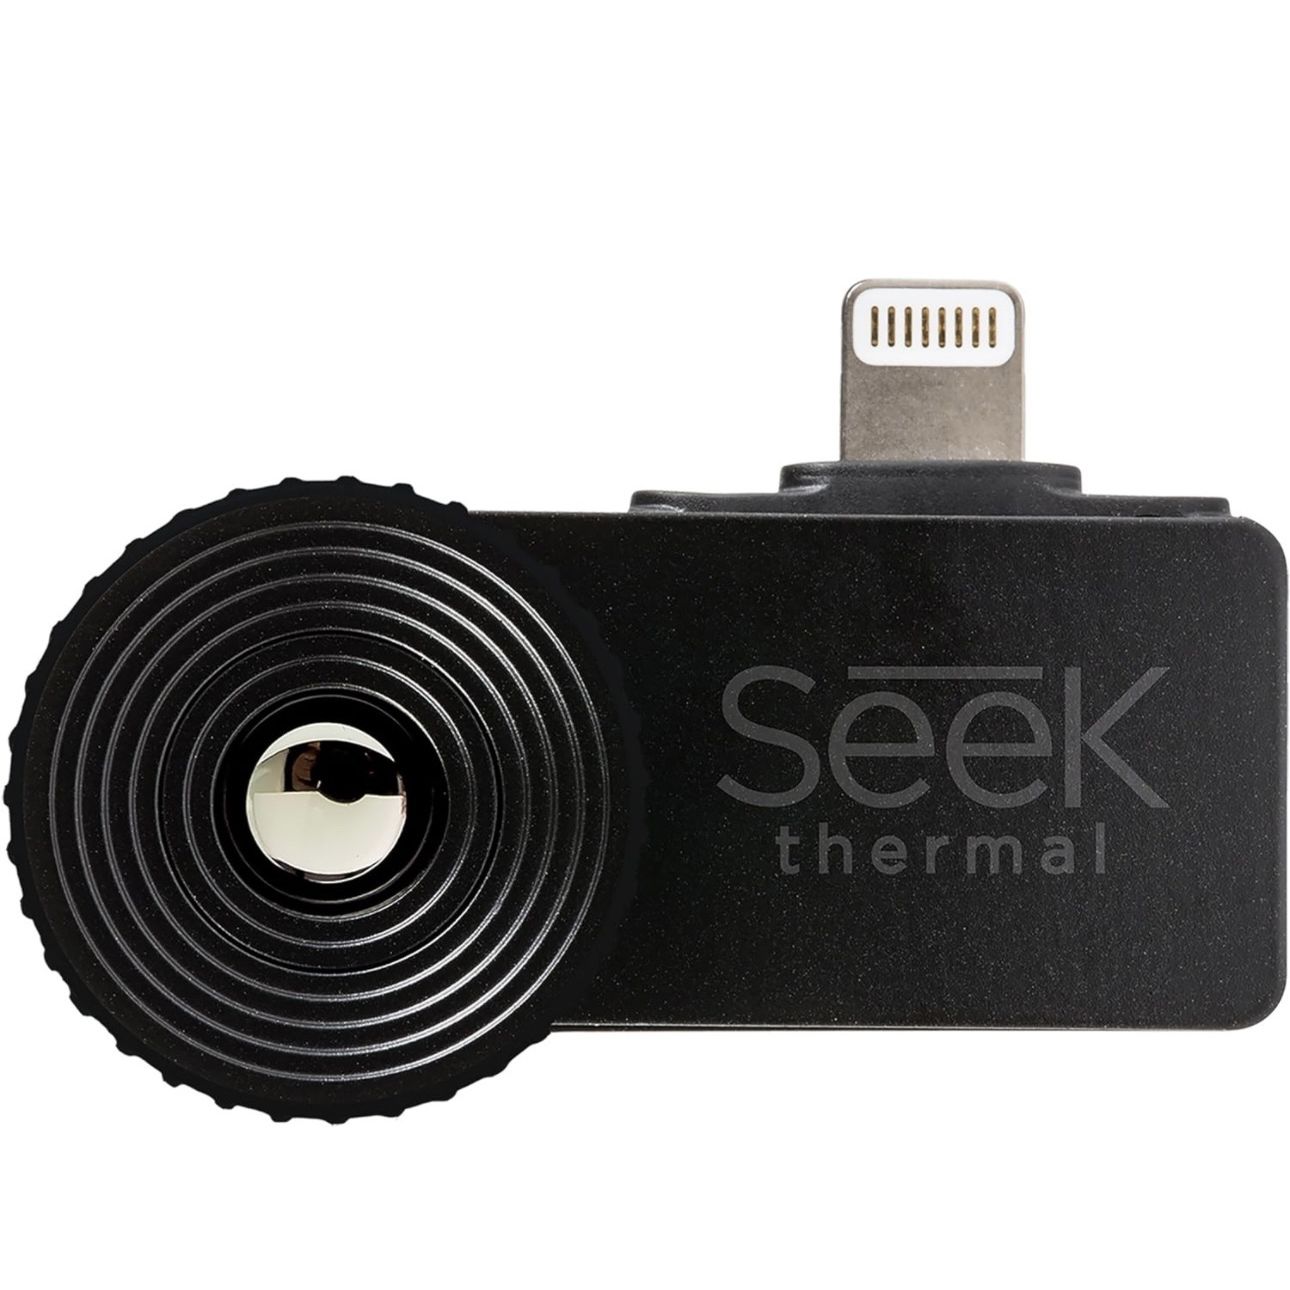 Seek Thermal CompactXR – Outdoor Thermal Imaging Camera for iOS, Black (LT-AAA)